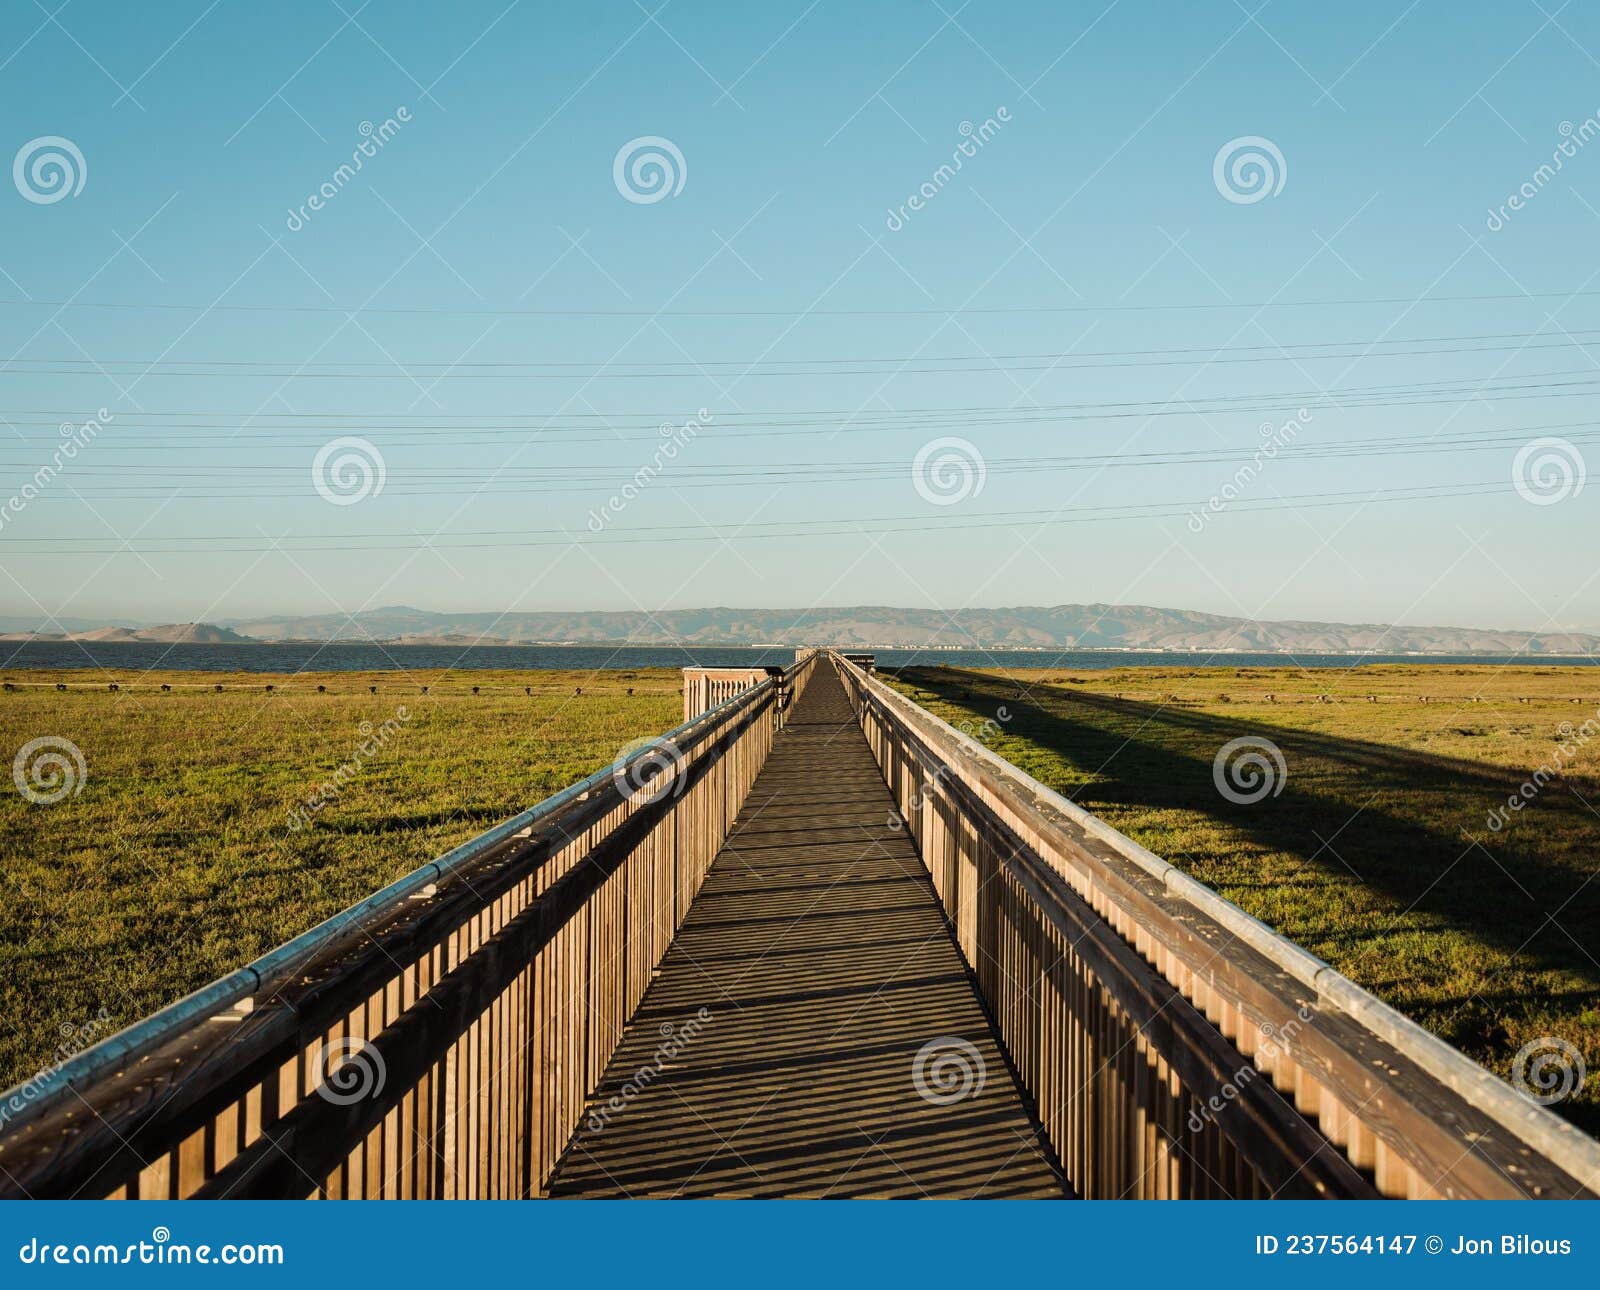 marsh boardwalk trail at baylands nature preserve, in palo alto, california